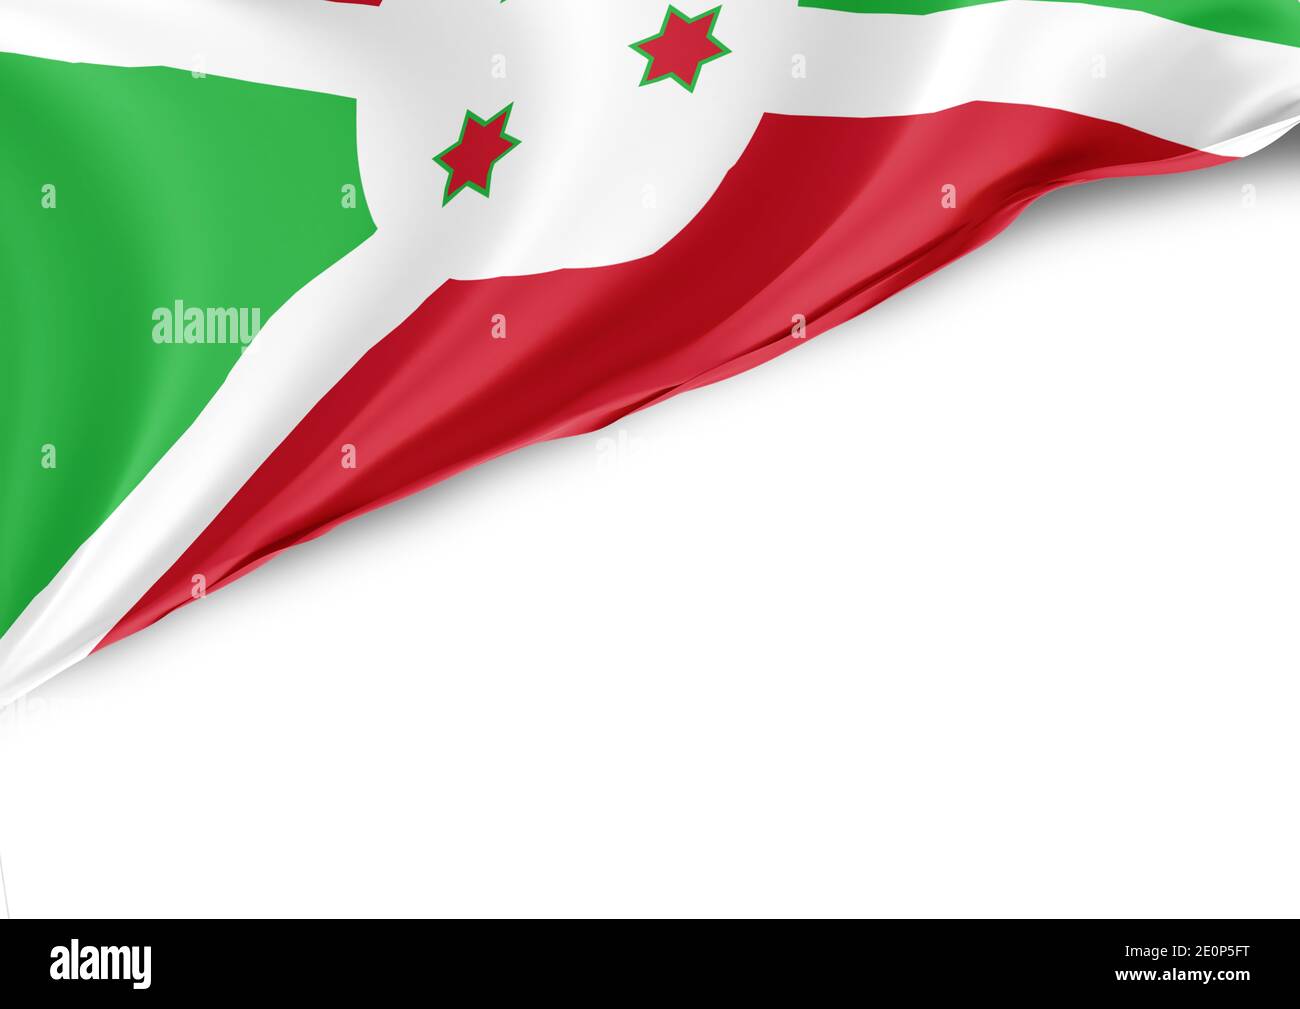 Burundi bandiera nazionale in background bianco Foto Stock